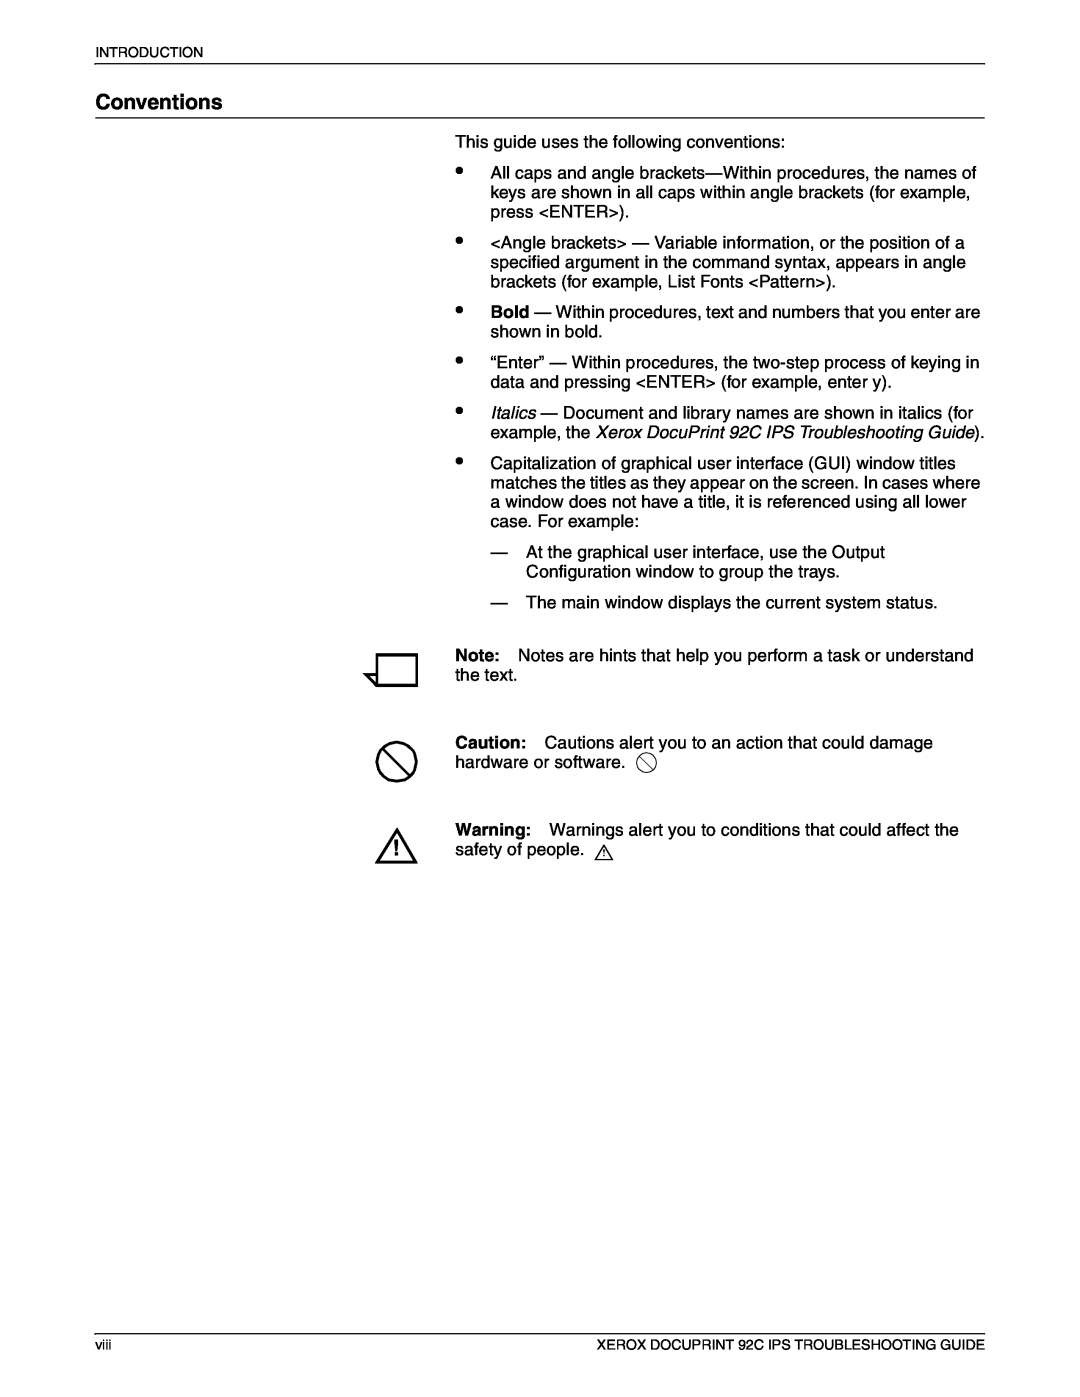 Xerox 92C IPS manual Conventions 